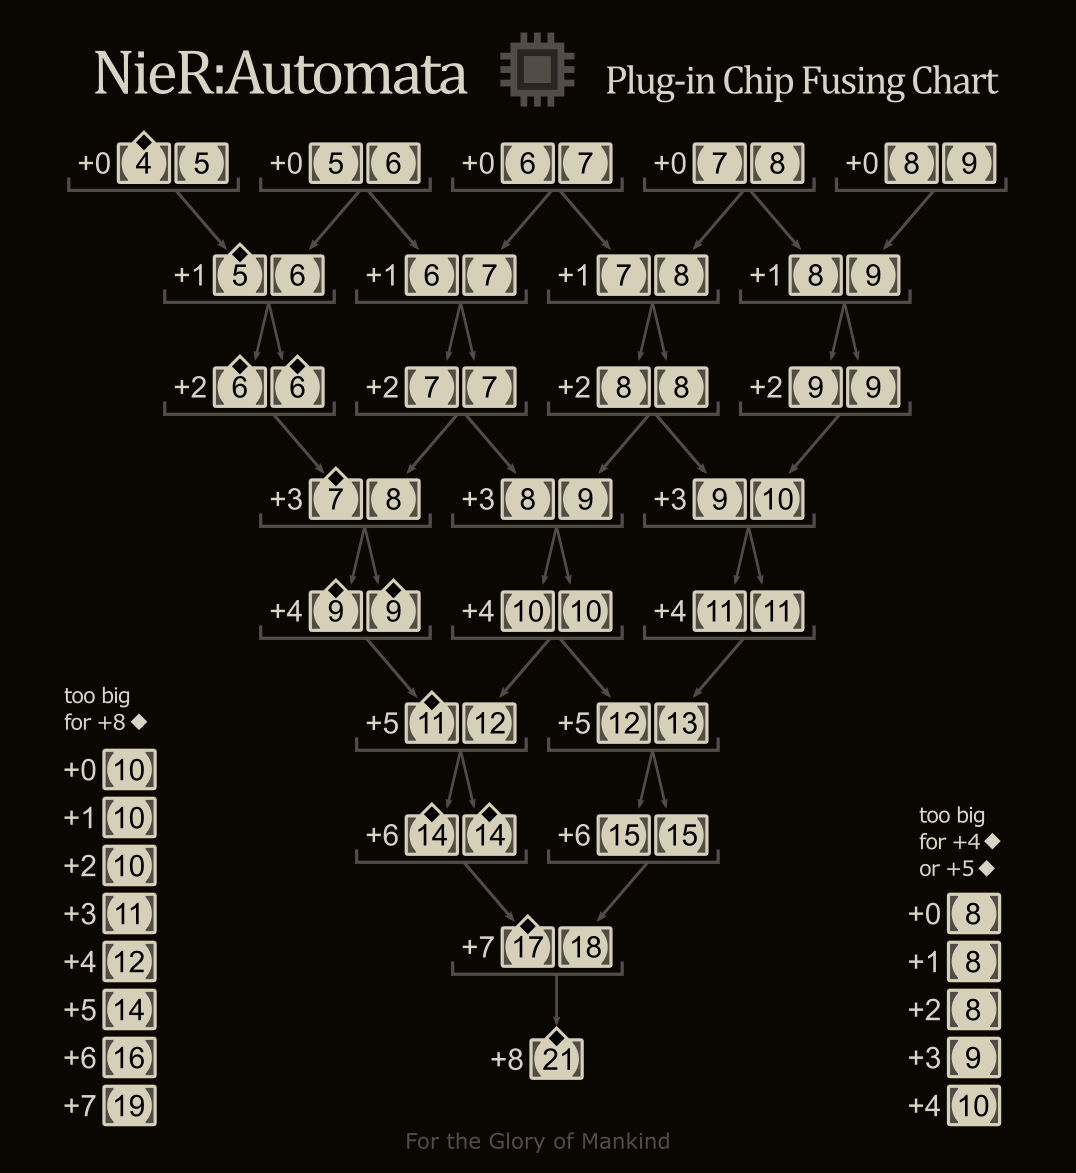 NieR:Automata™ - Chip Fusing Guide - Plug-in Chip Fusing Flowchart